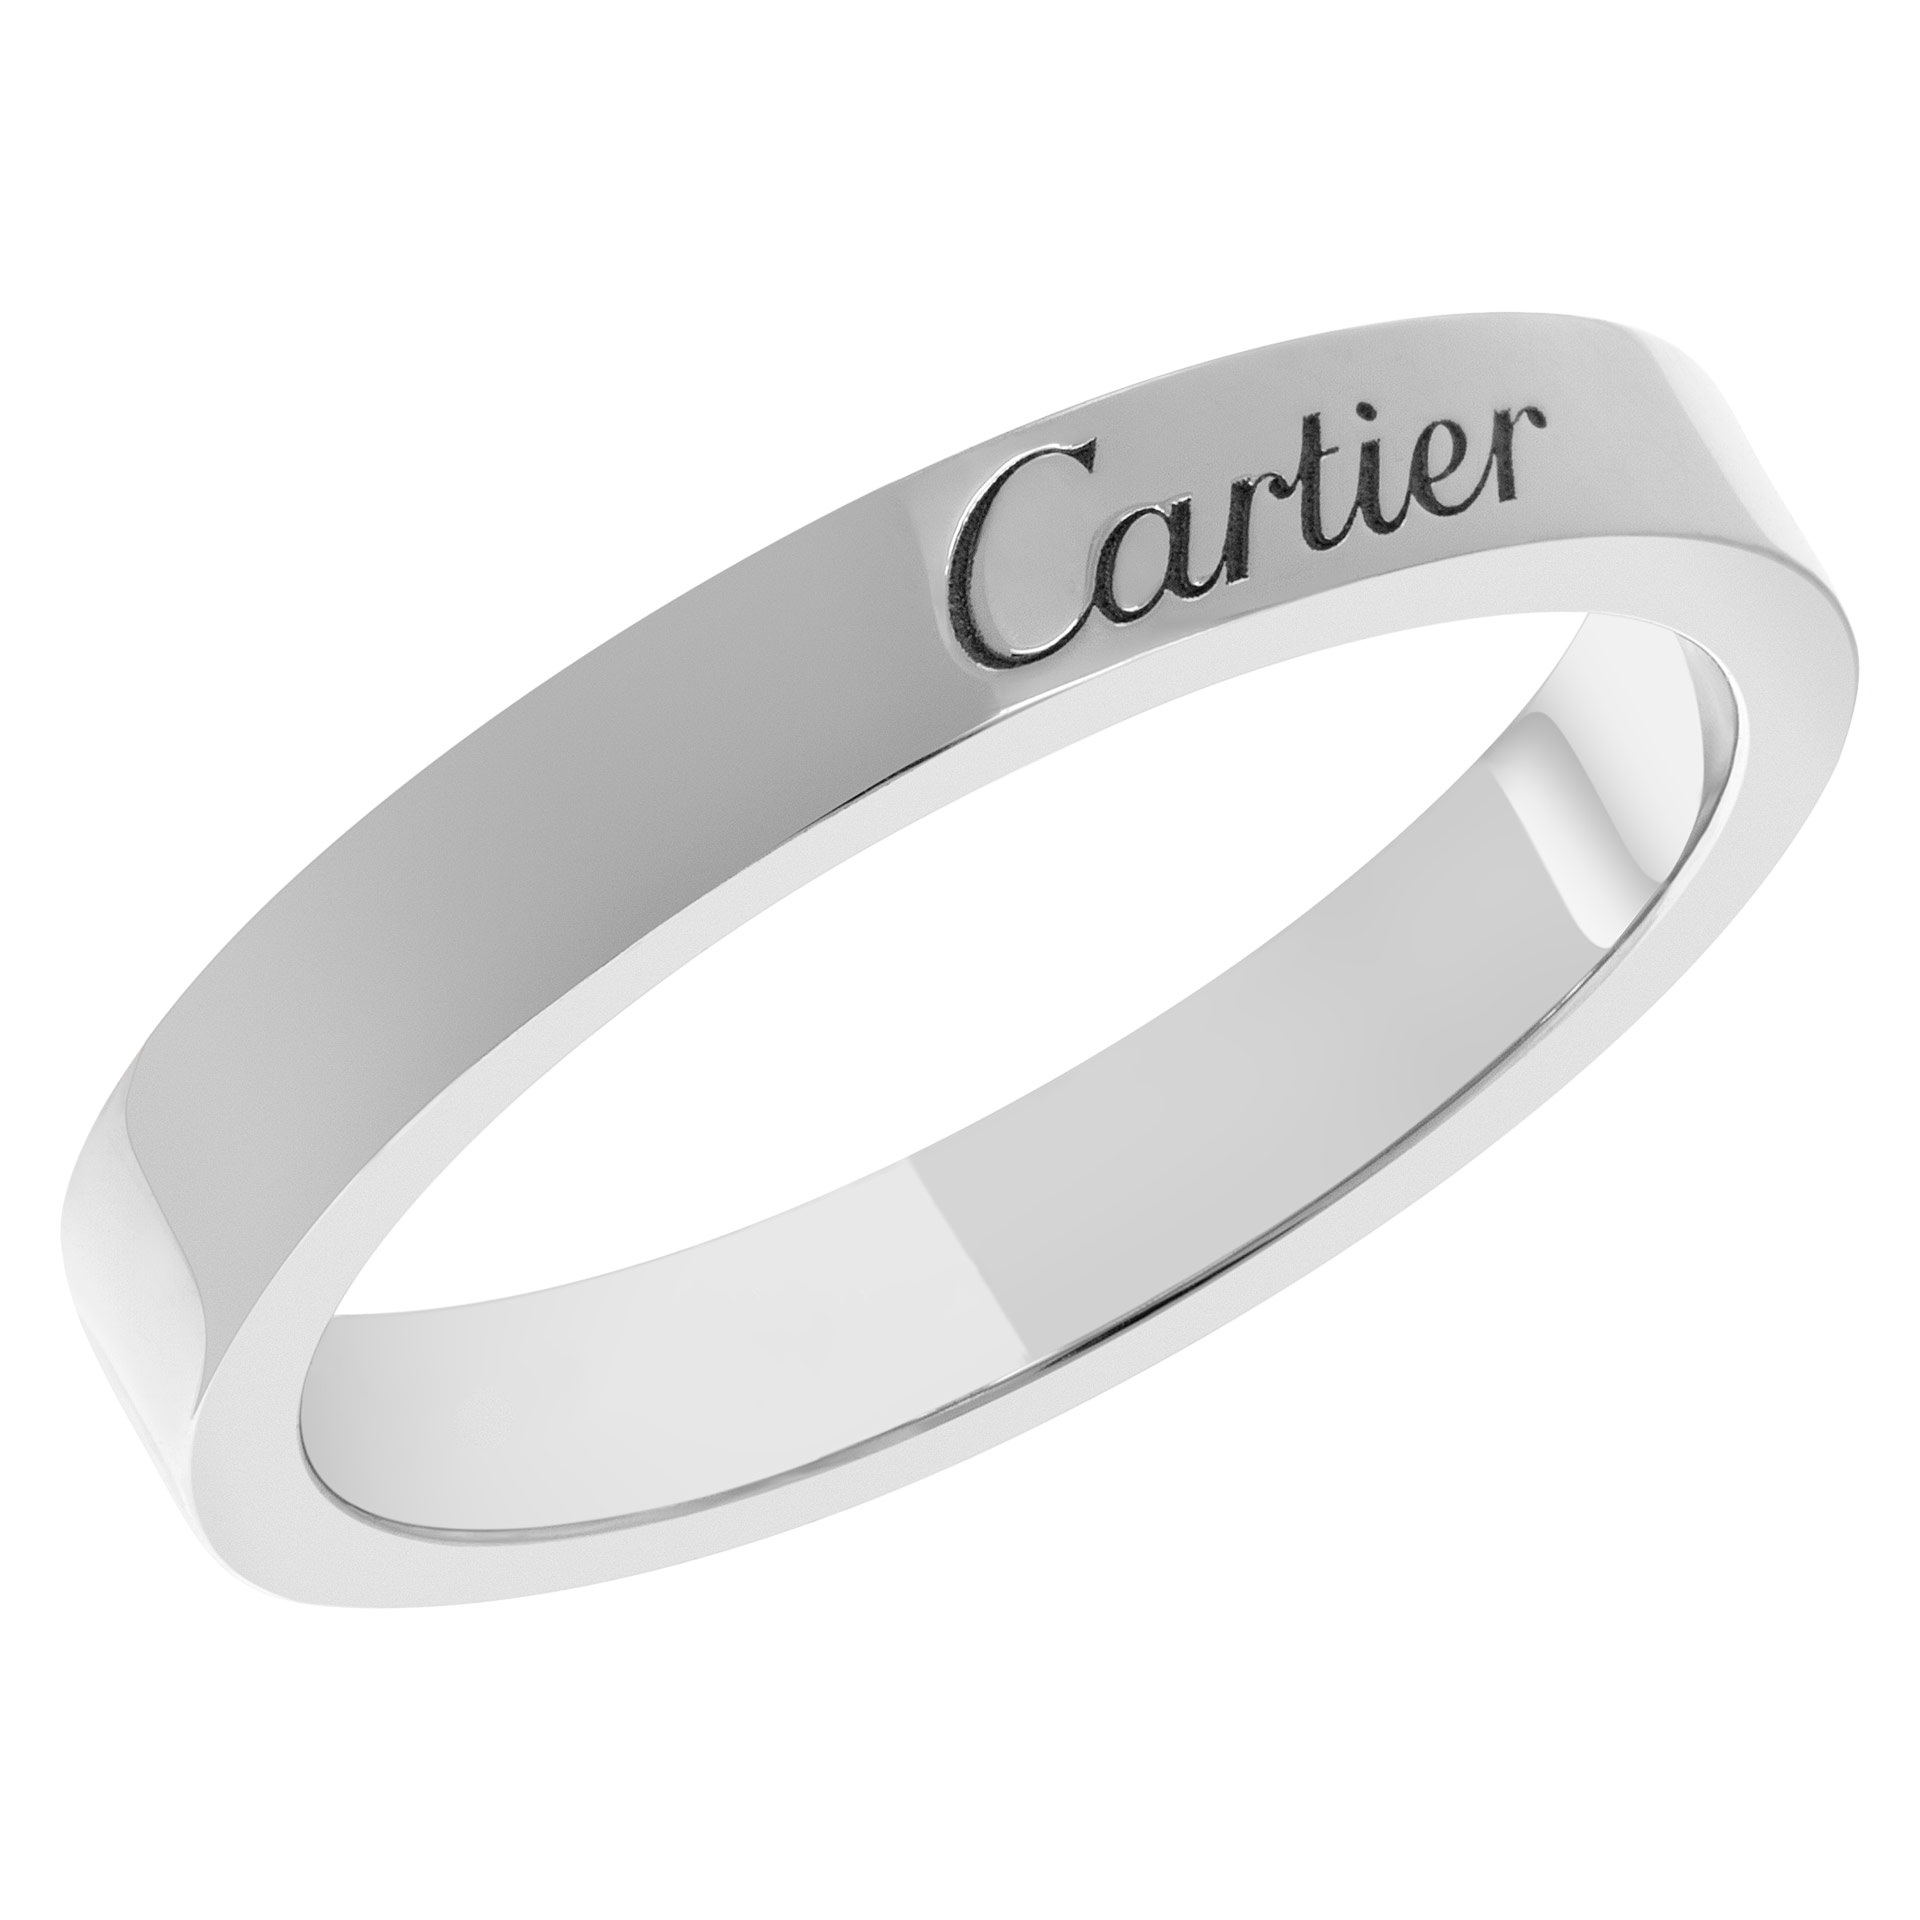 C De Cartier wedding band in Platinum image 2